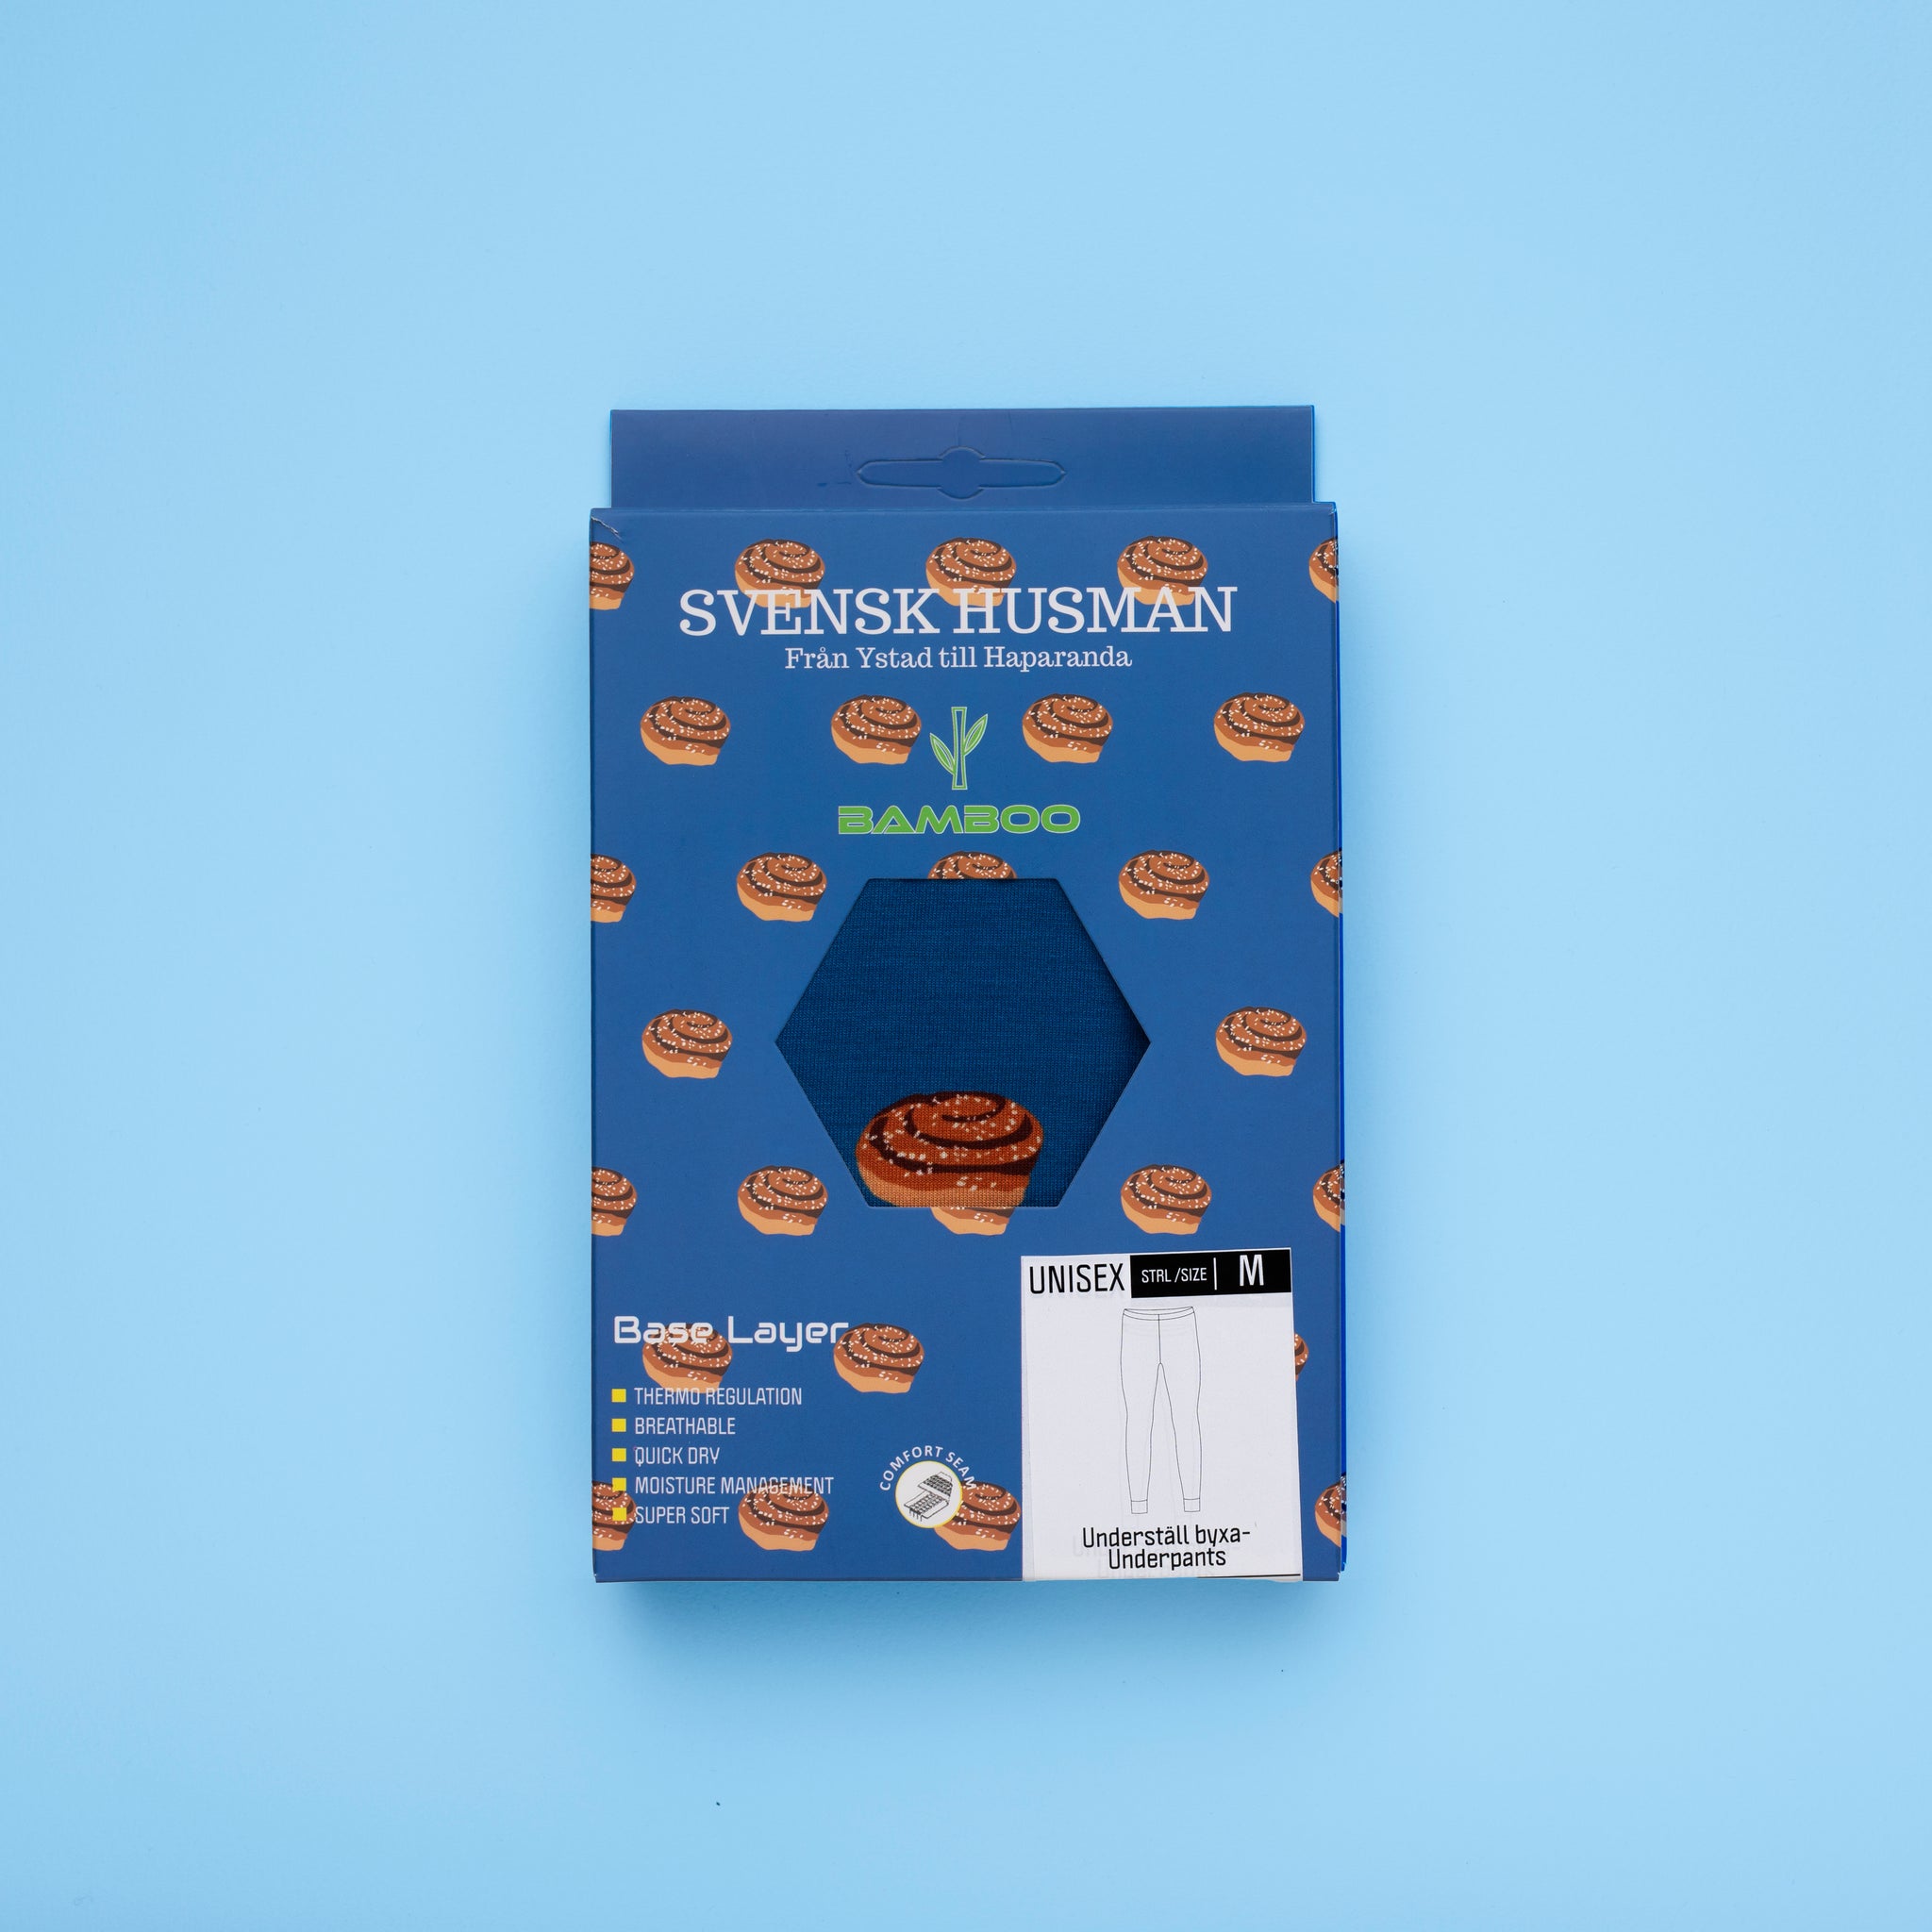 Subset package - Cinnamon roll